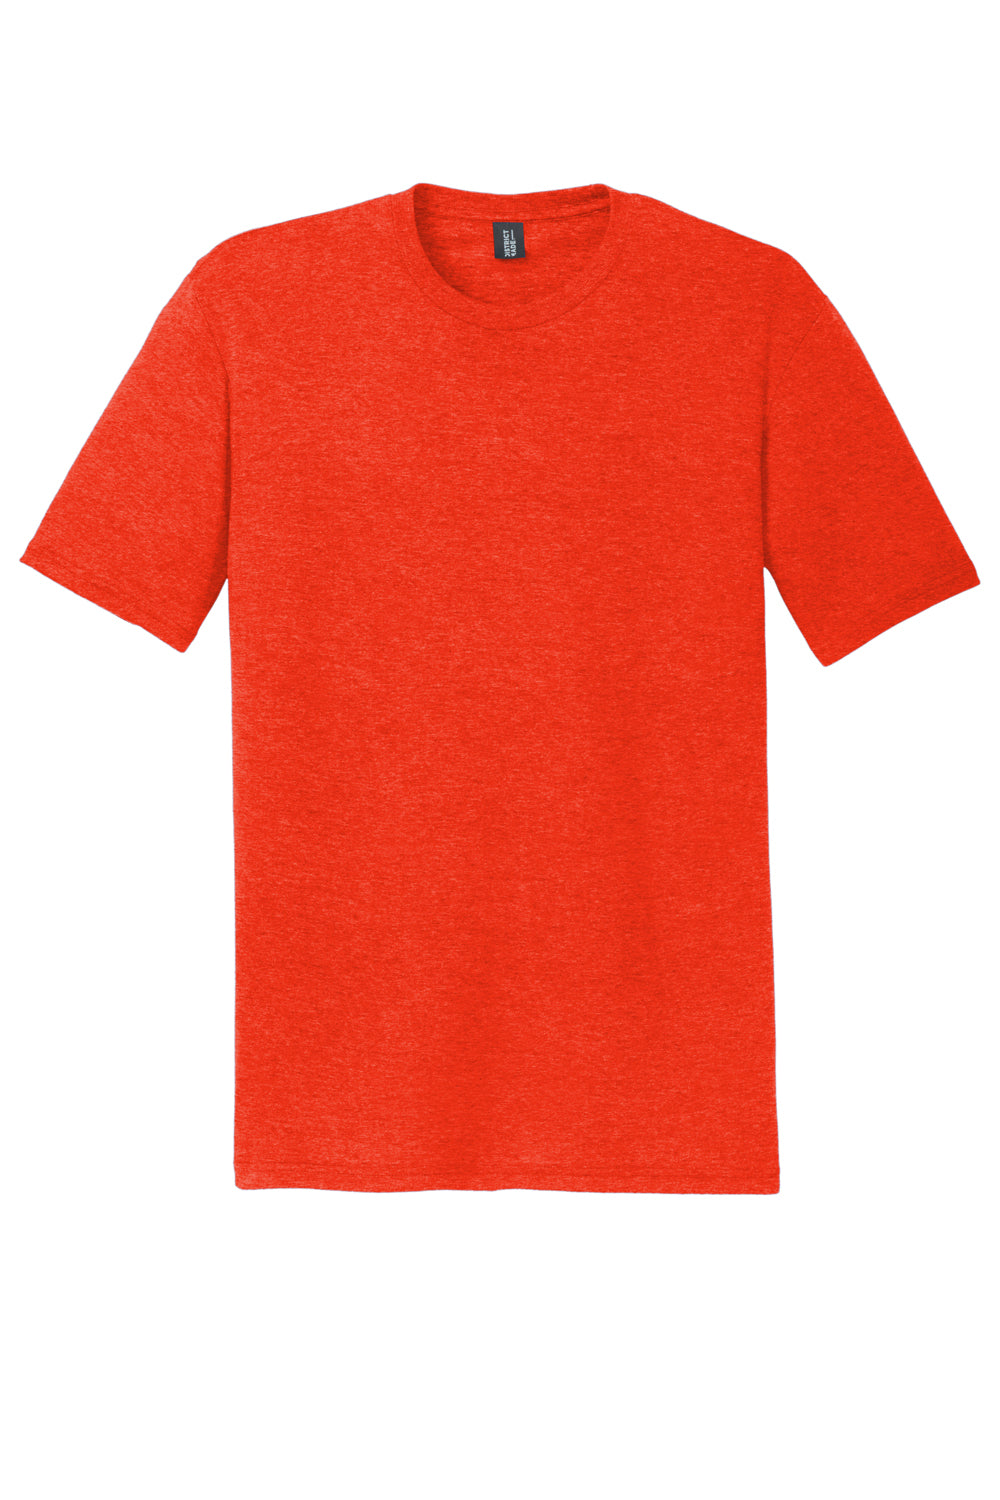 District DM130 Mens Perfect Tri Short Sleeve Crewneck T-Shirt Heather Deep Orange Flat Front